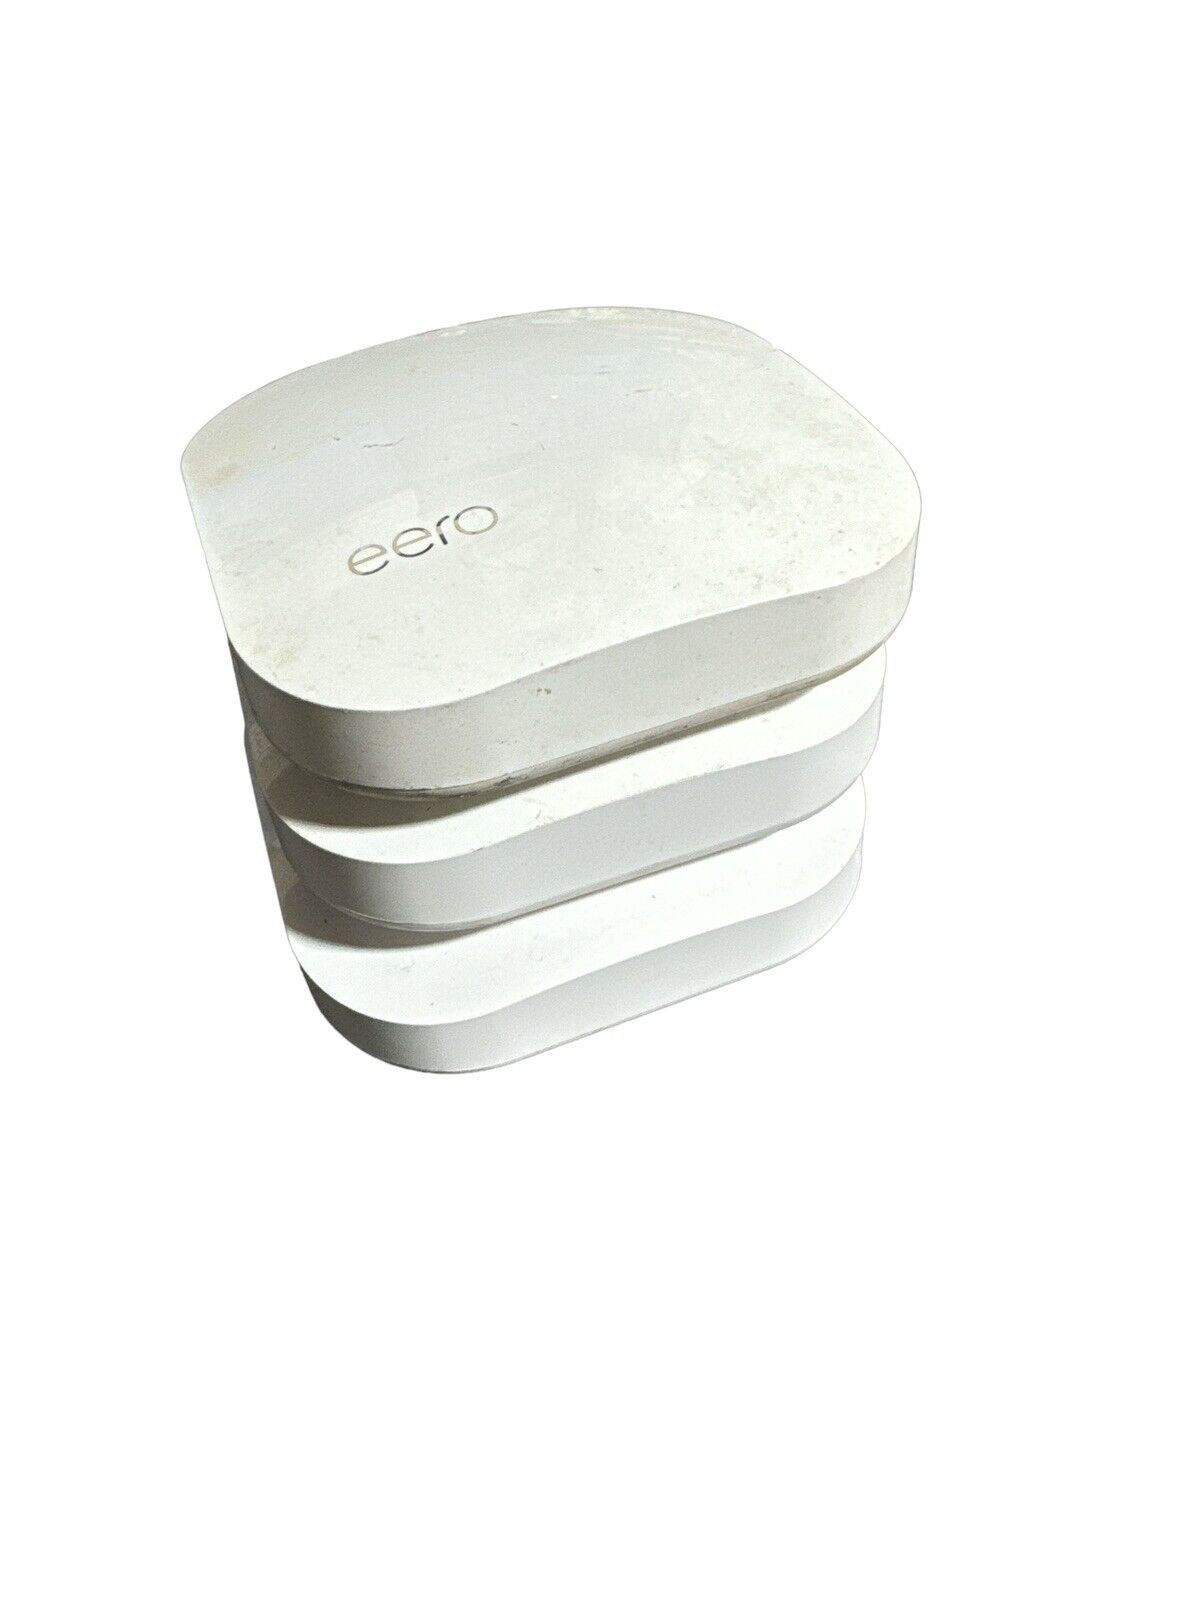 eero B010301 Pro Mesh 2nd Generation WiFi System, White - Set of 3